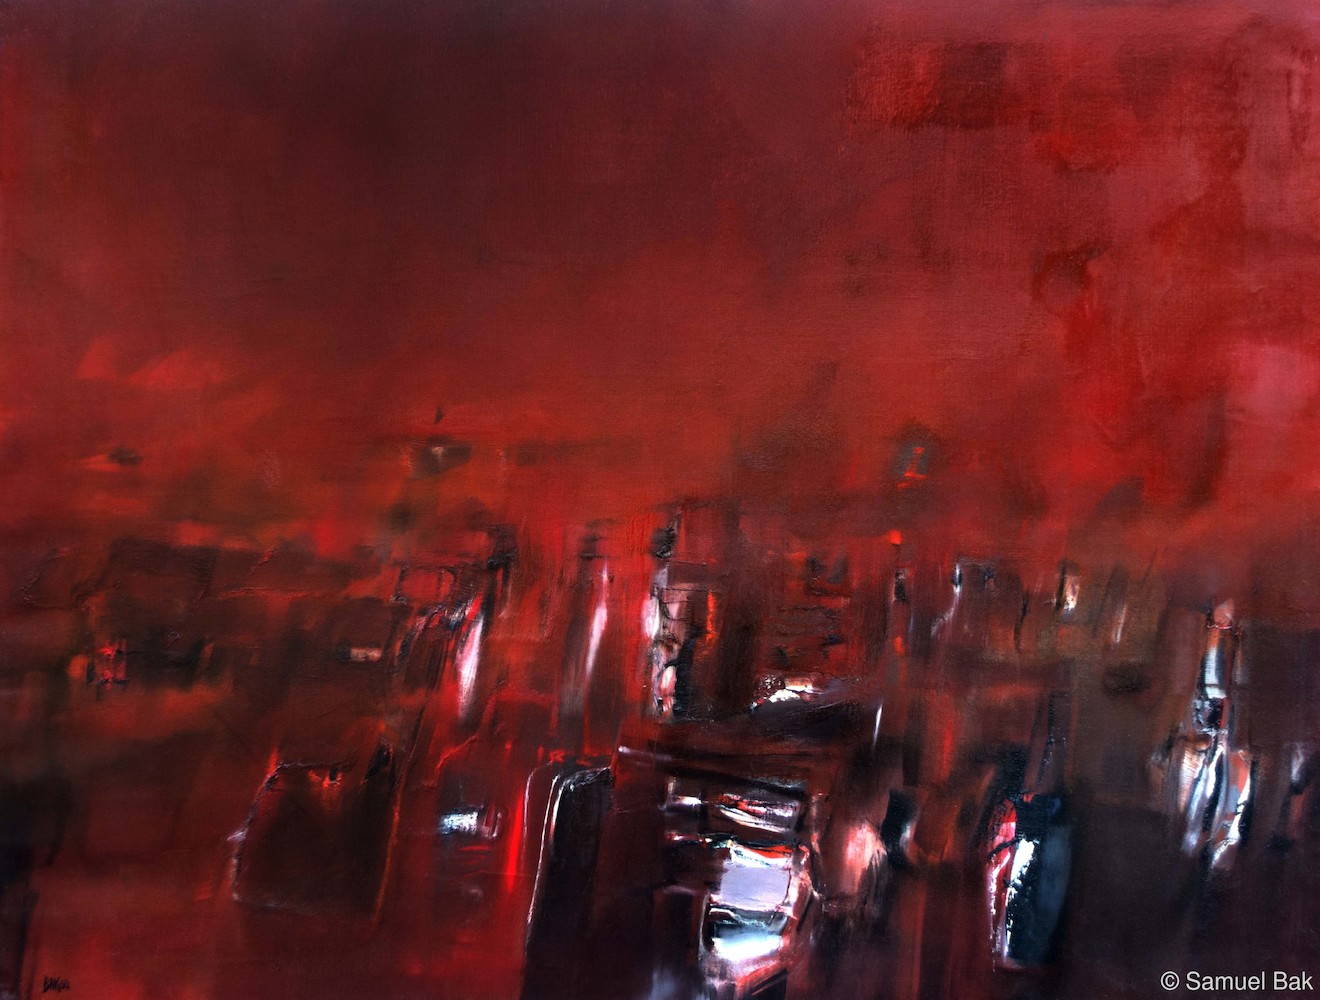 Red Painting / Quadro Rosso (Raccoglimento)